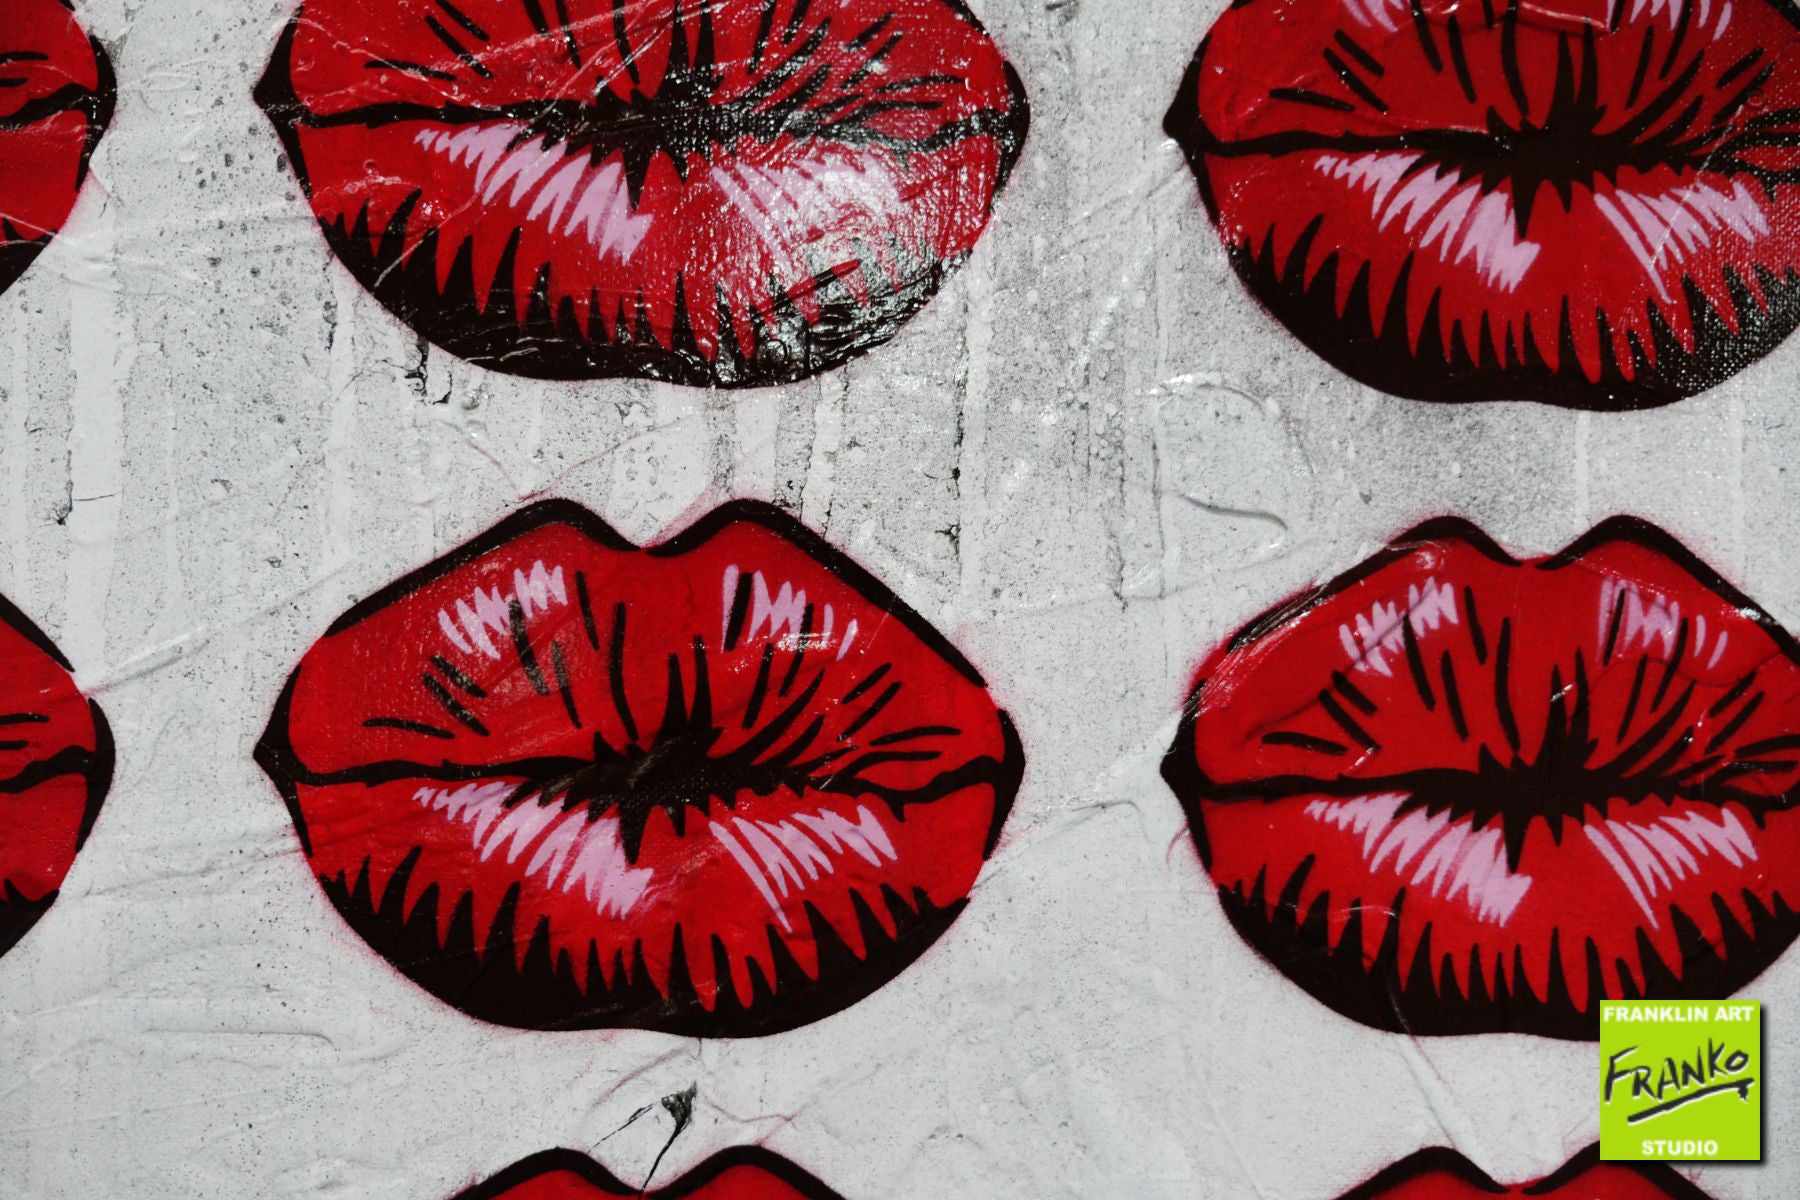 Lickety 75cm x 100cm Lips Kiss Textured Urban Pop Art Painting (SOLD)